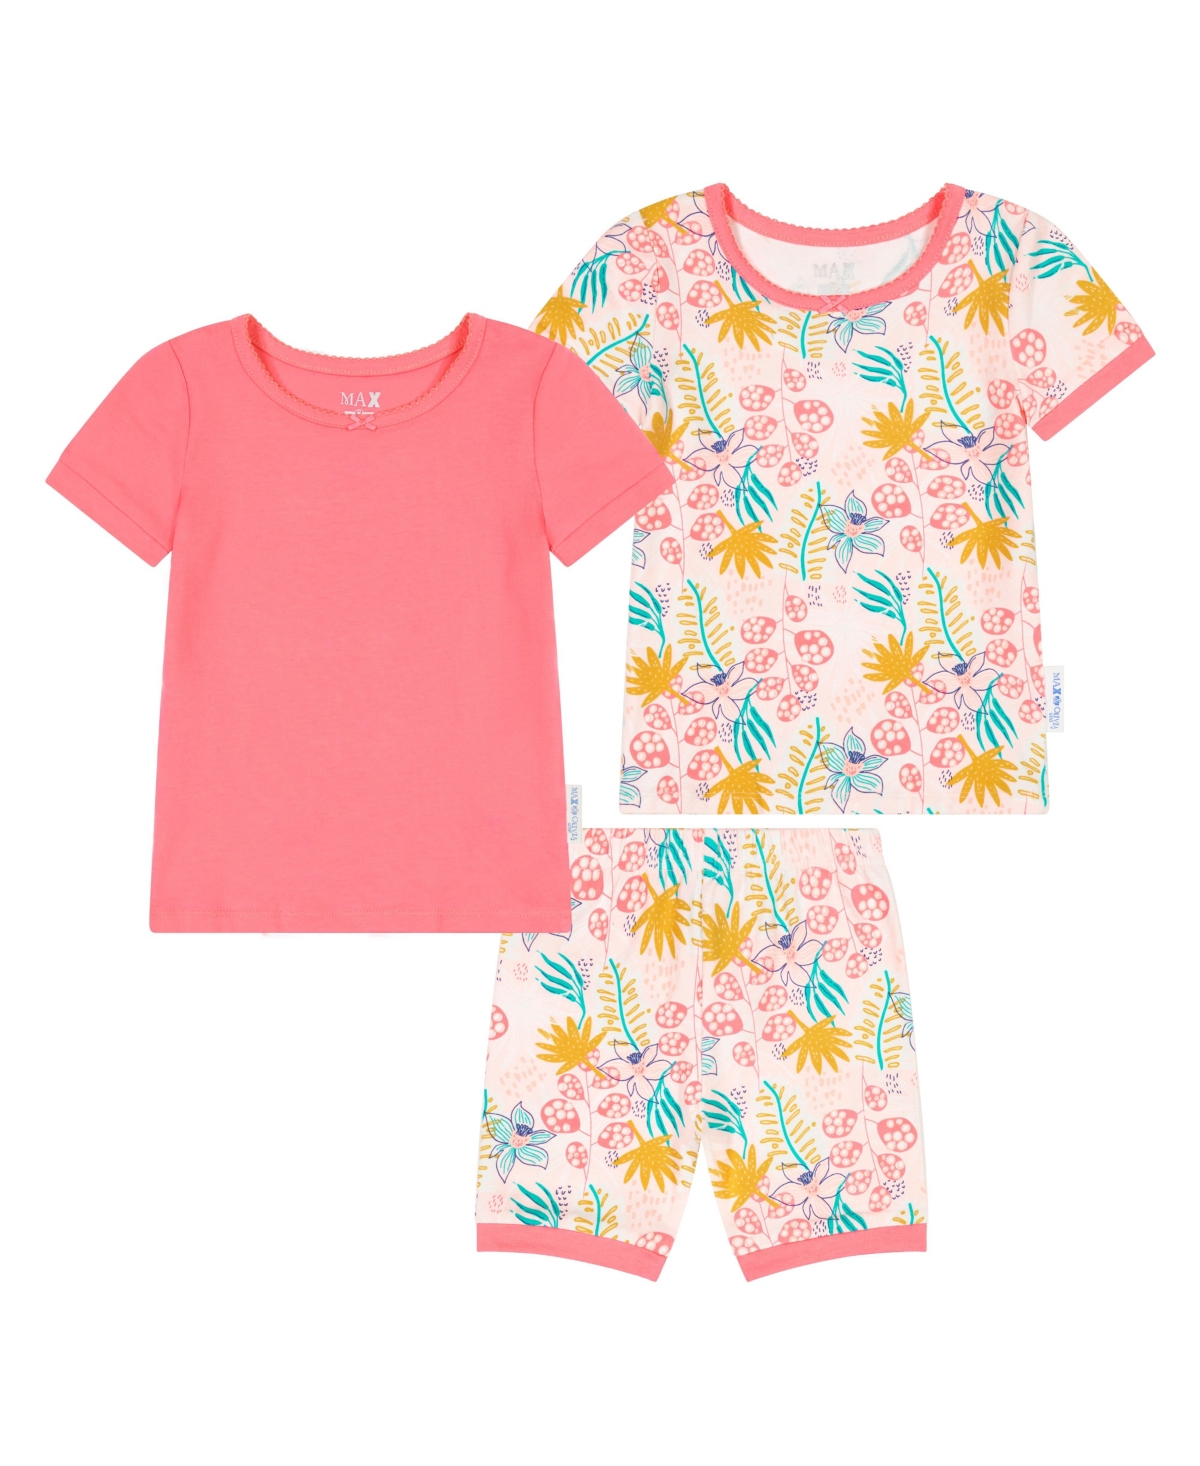 Max & Olivia Baby Girls Pink Floral Snug Fit Pajama, 3 Piece Set